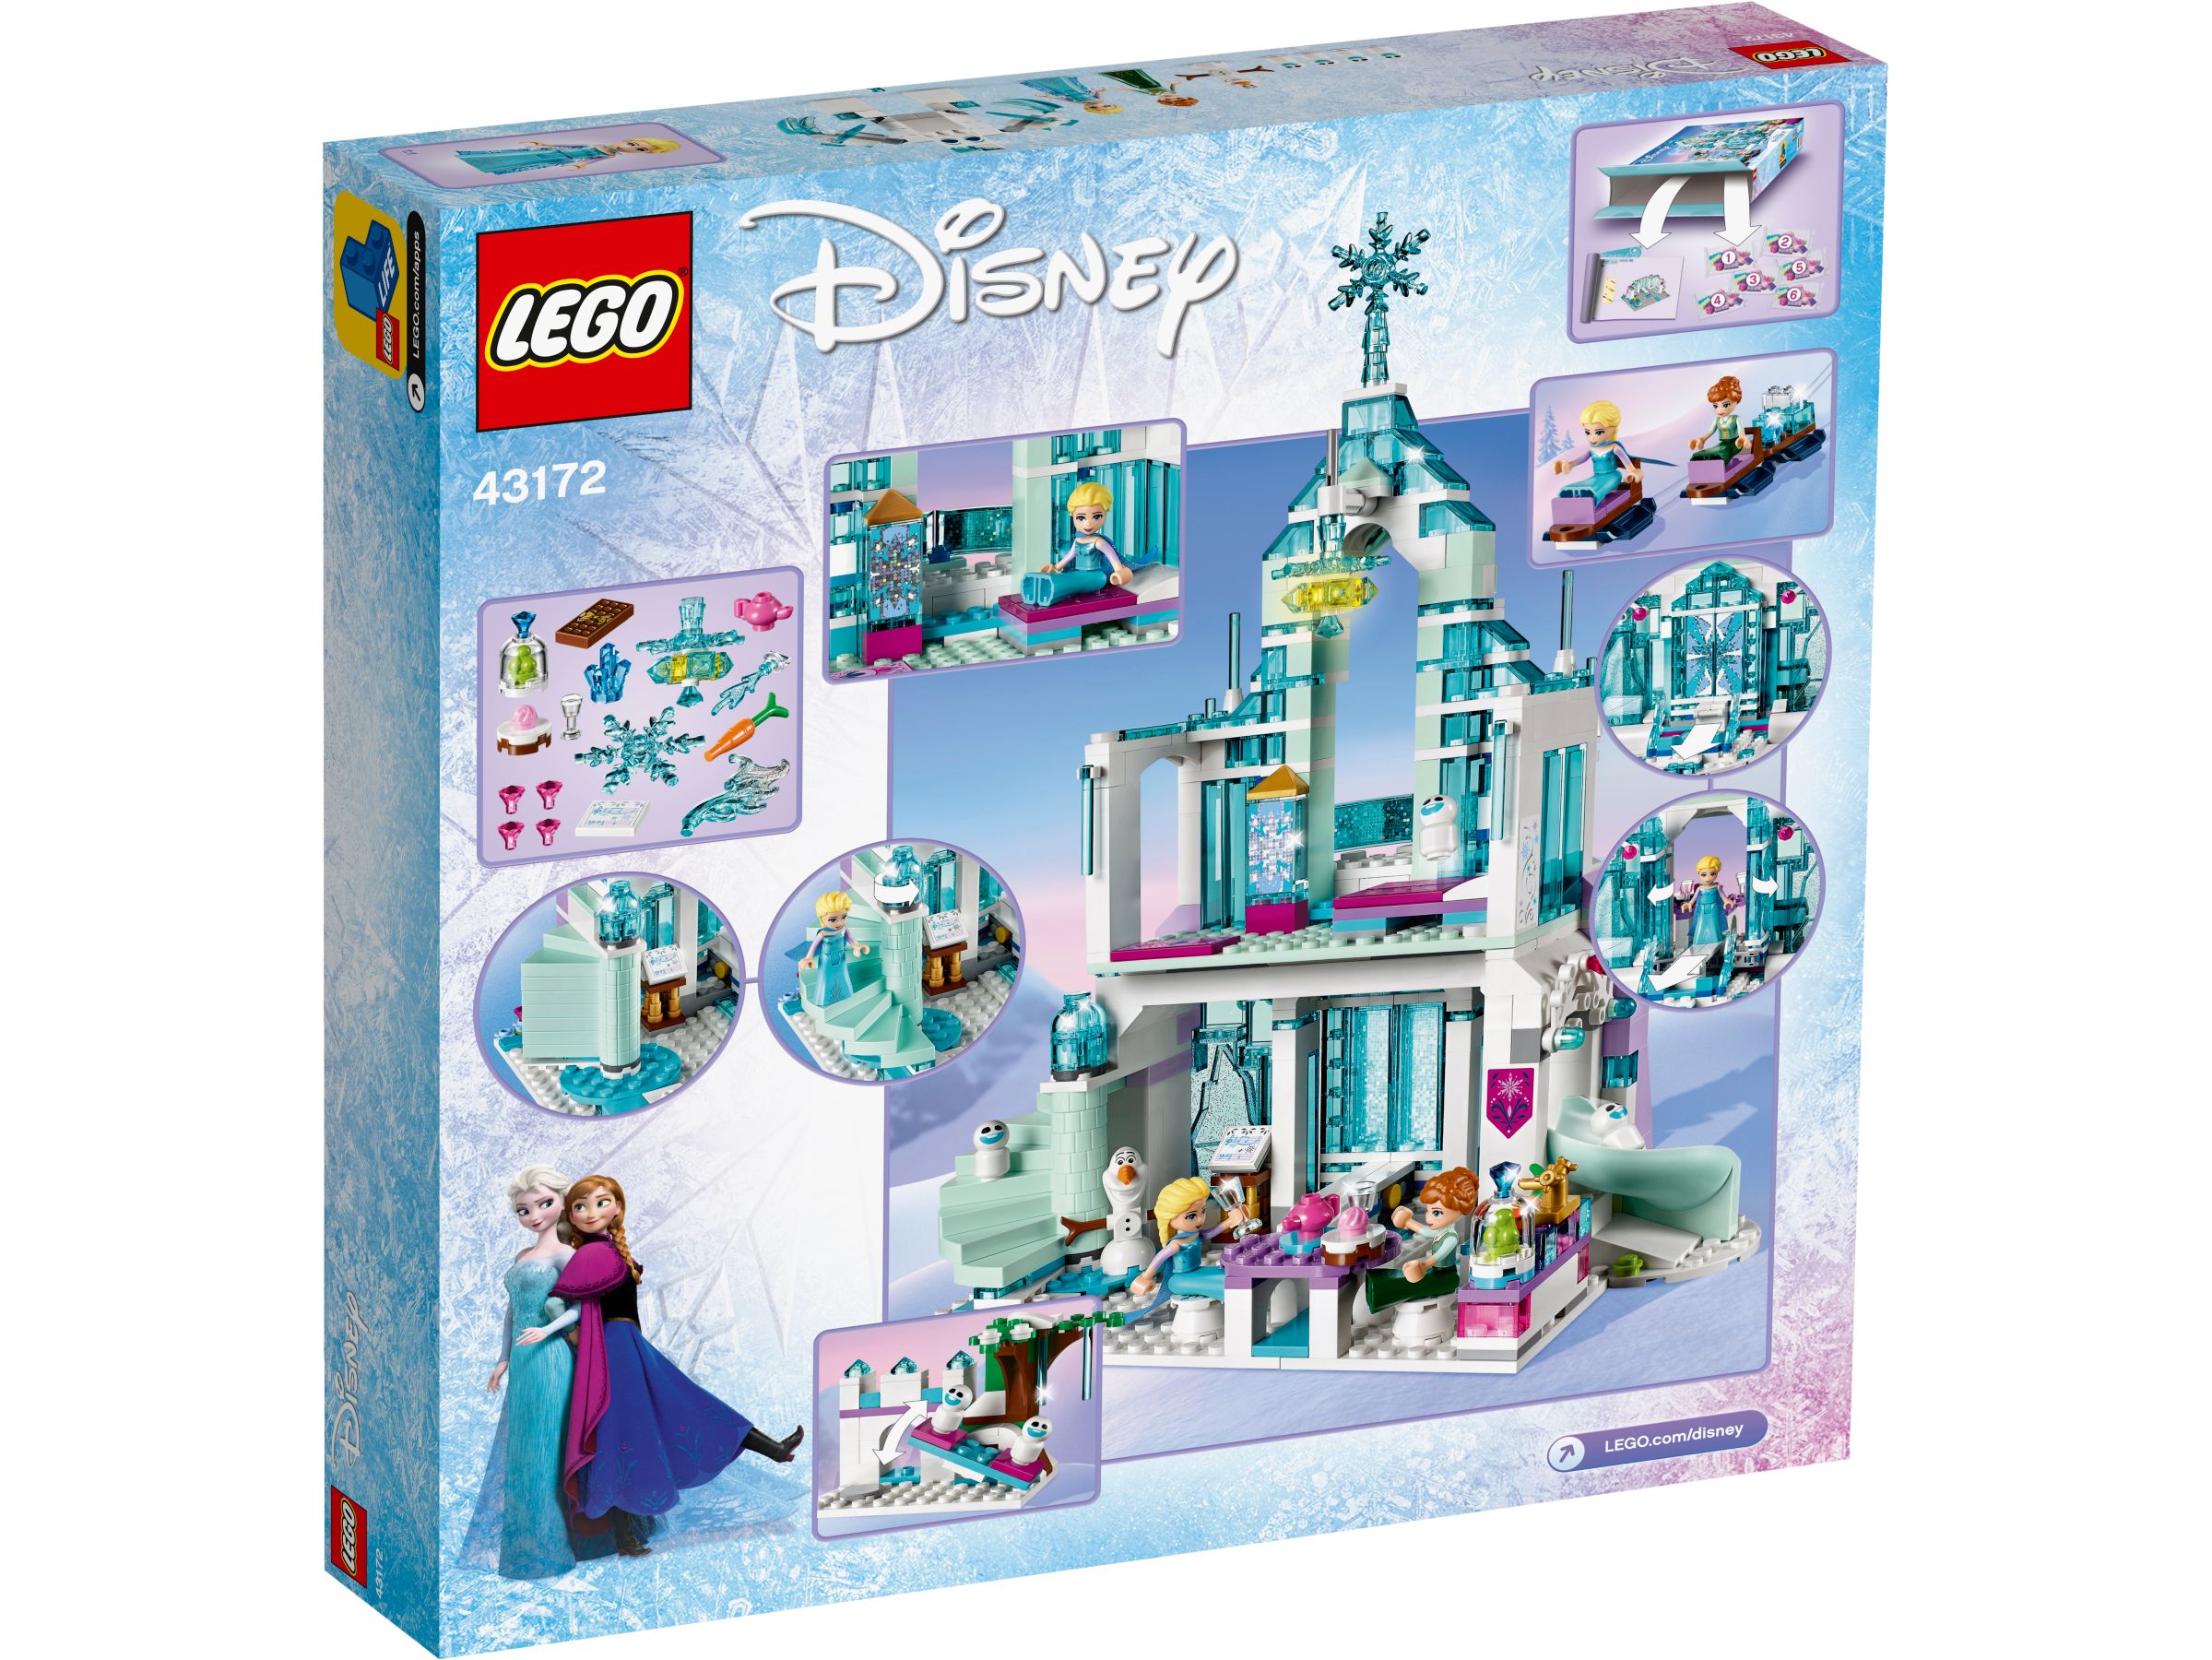 LEGO Disney 43172 Elsas magischer Eispalast LEGO_43172_alt5.jpg